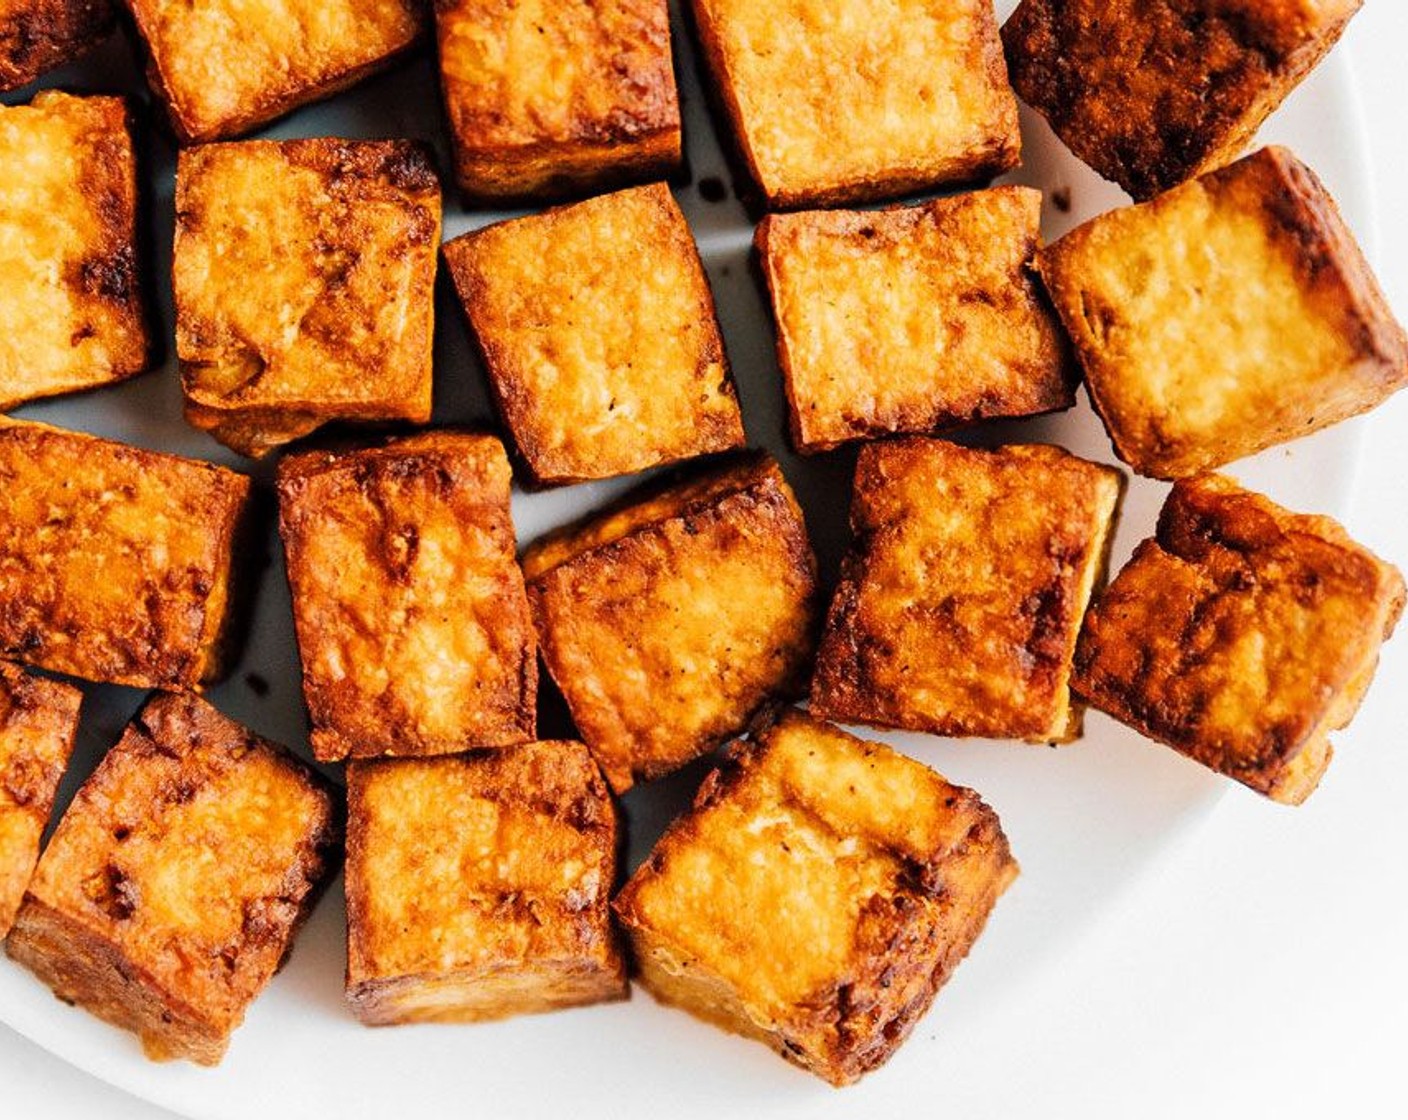 Crispy Air Fried Tofu